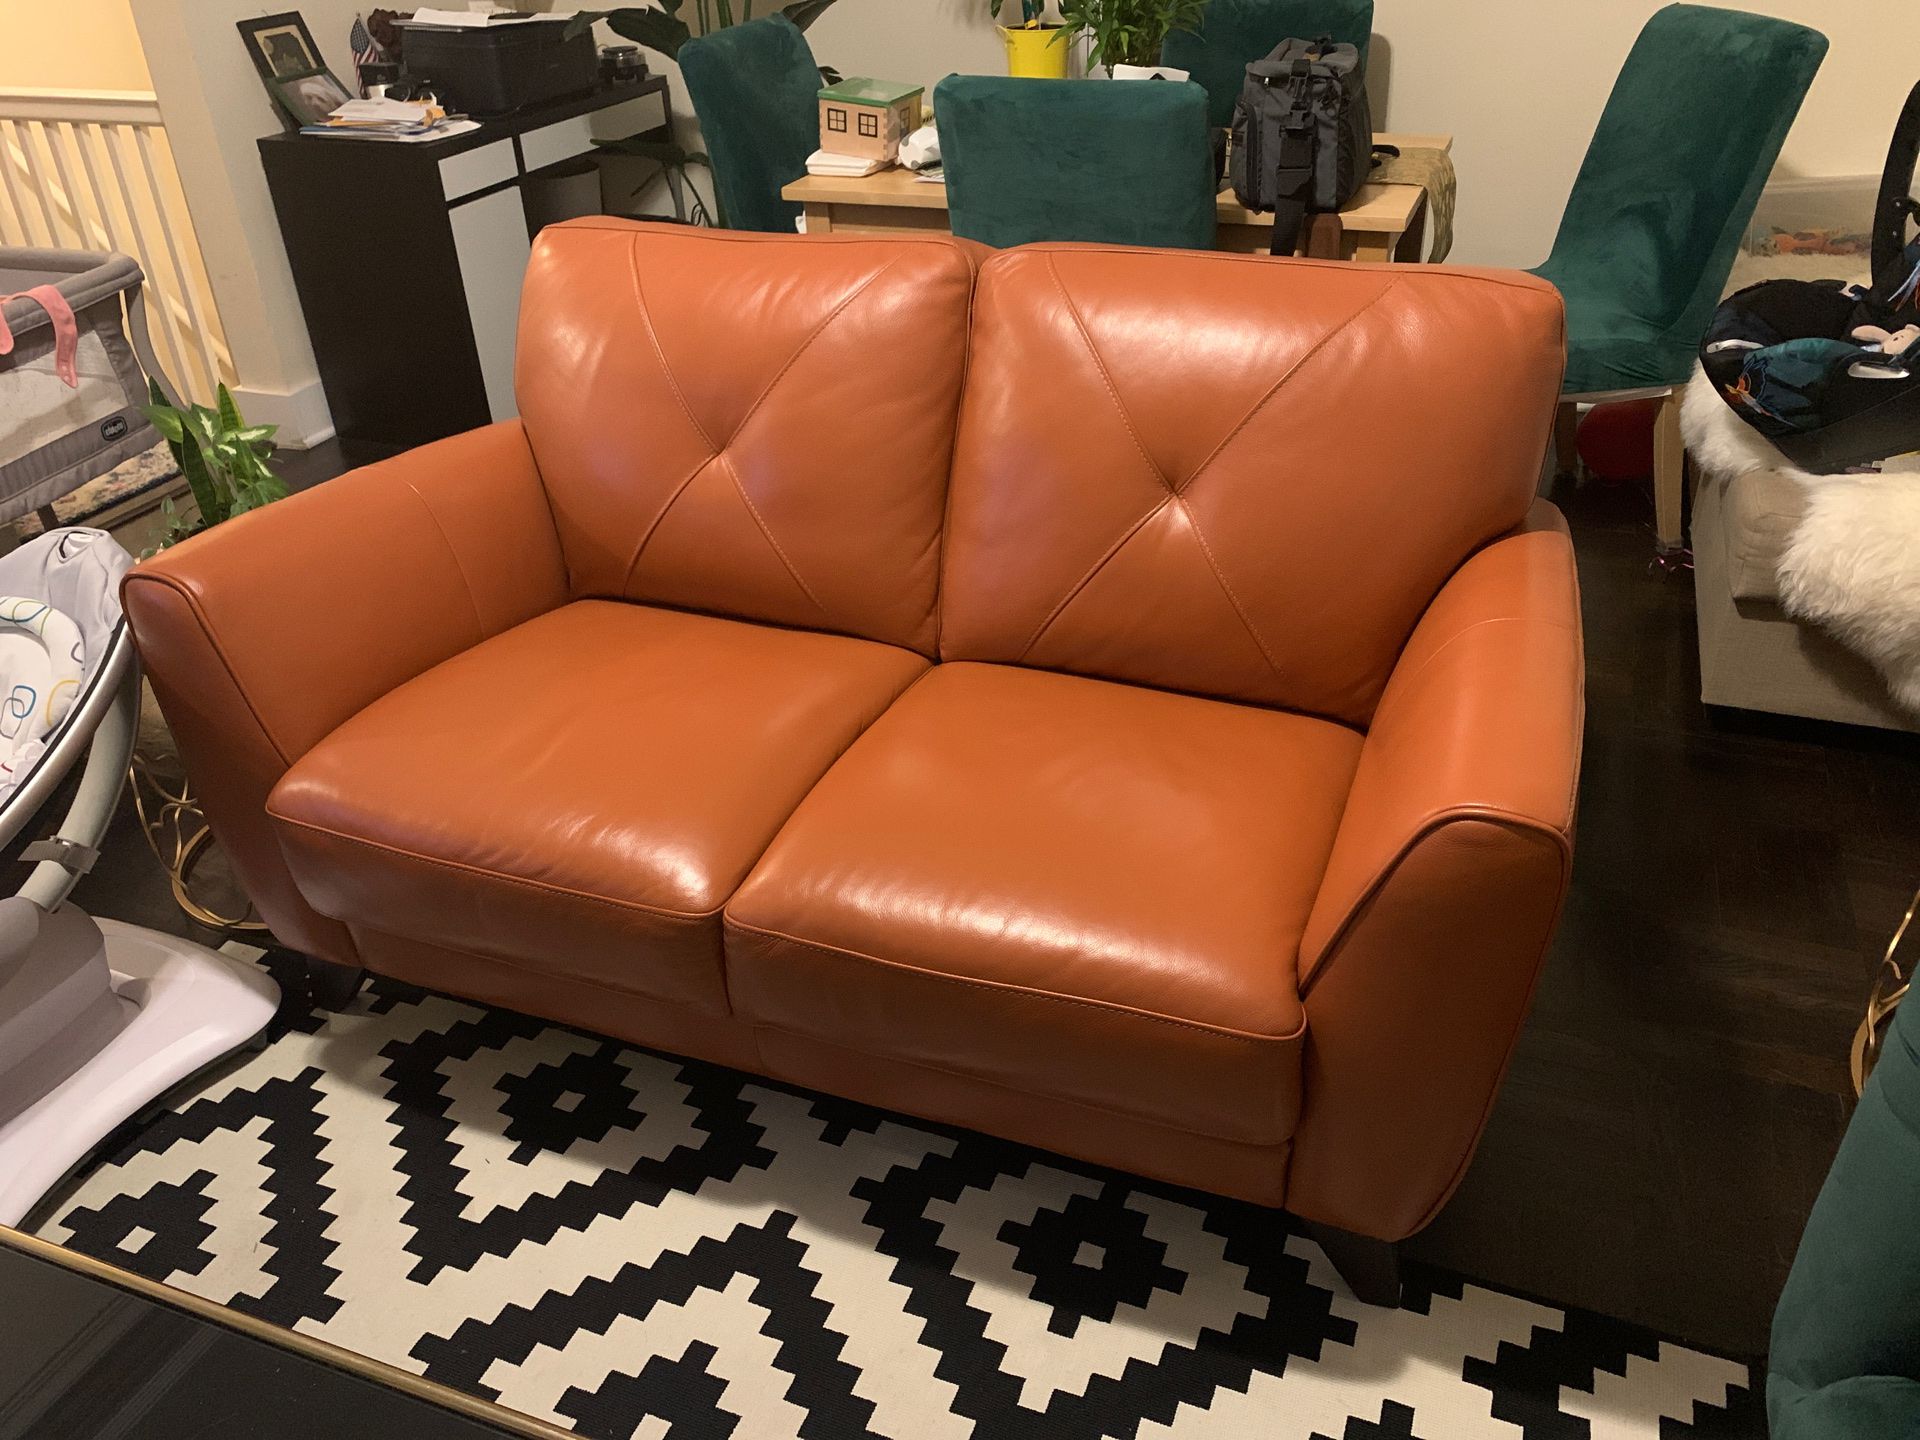 Genuine leather sofa -almost new